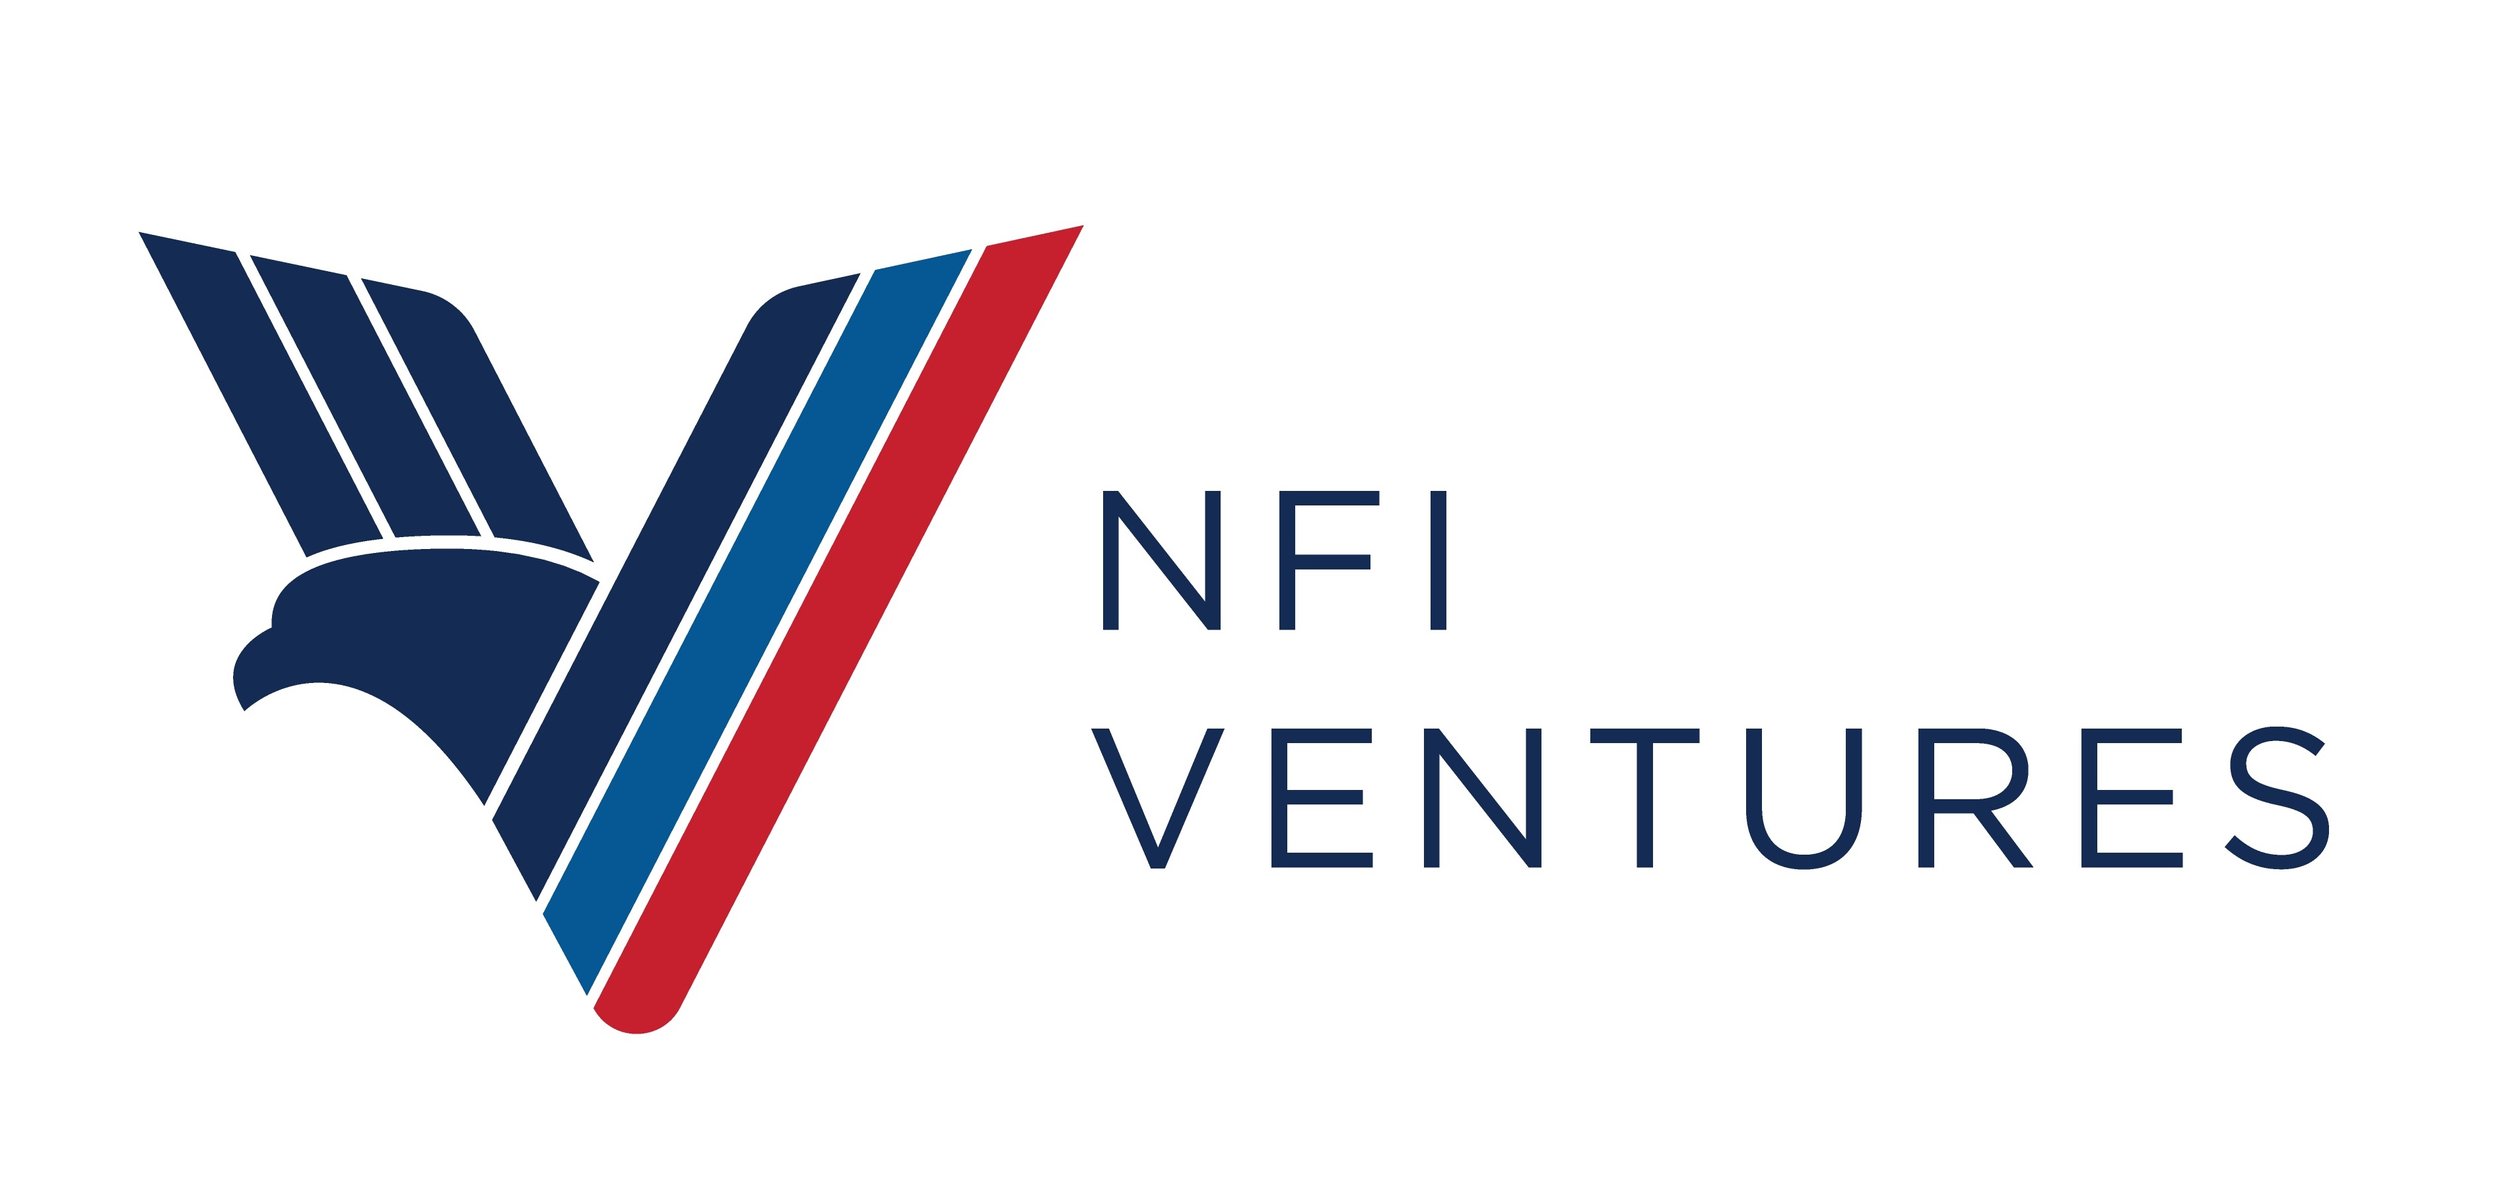 14662181-nfi-ventures-logo-3787x1820.jpeg